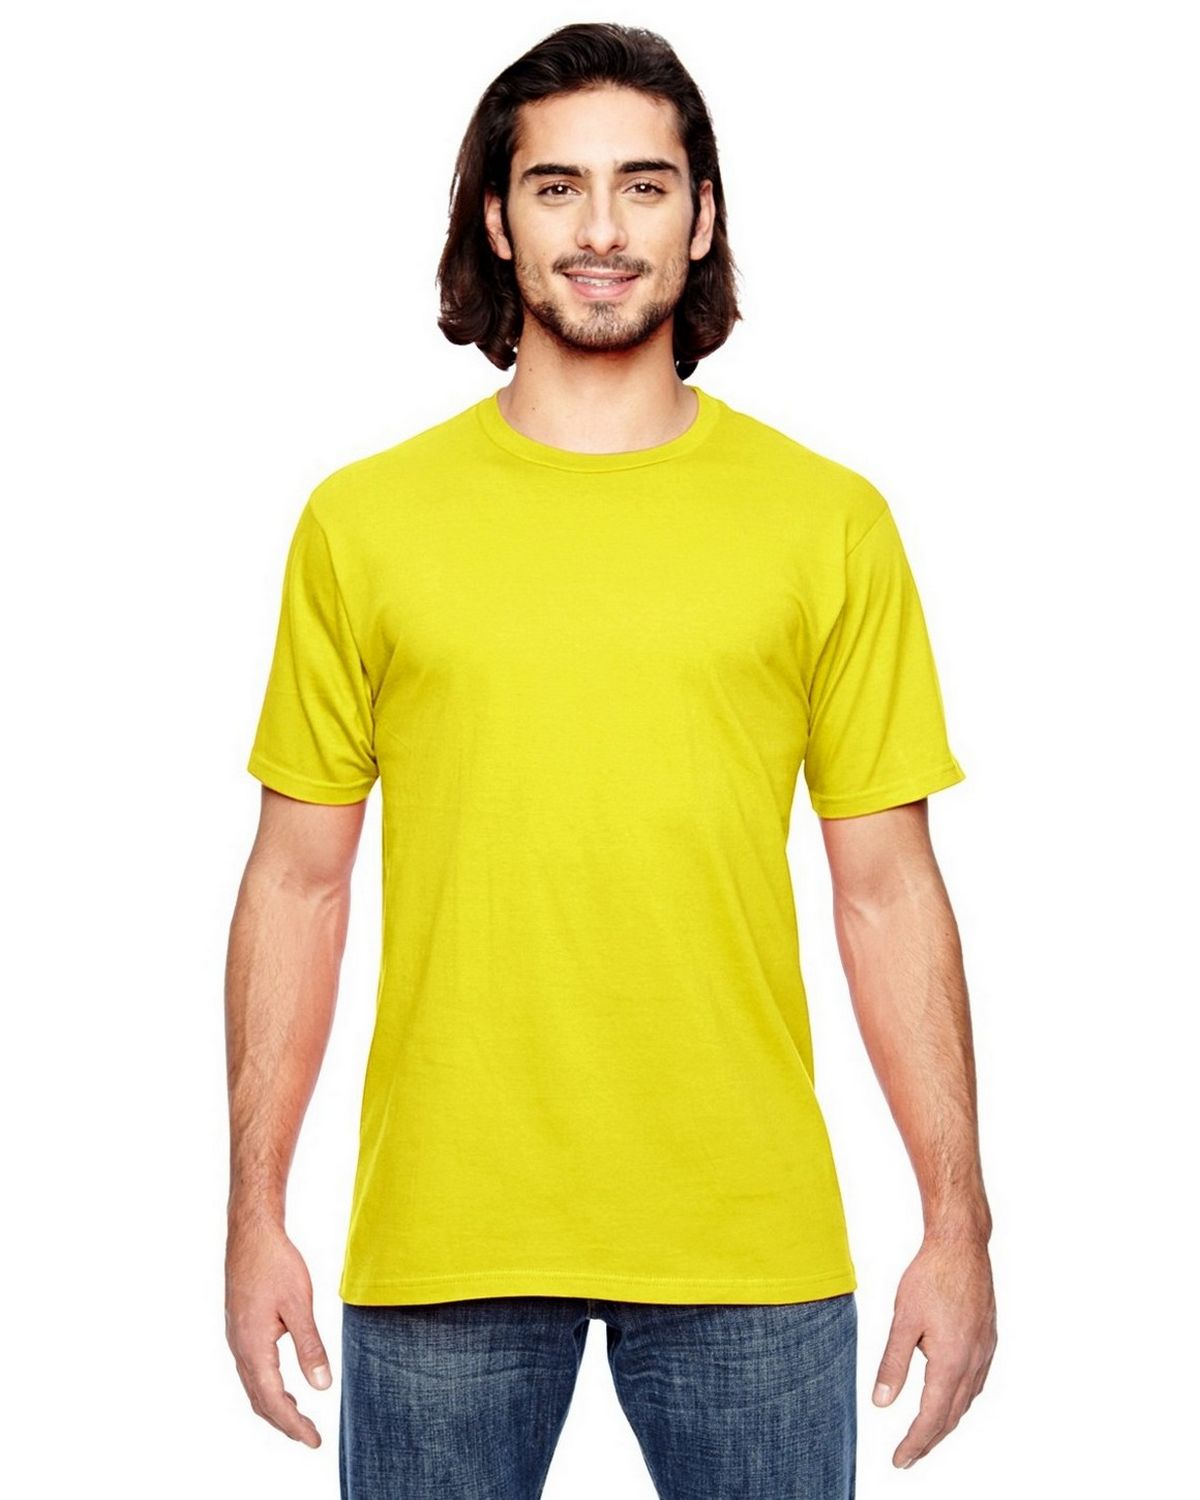 Anvil 980 4.5 oz. Ringspun Cotton Fashion-Fit T-Shirt - ApparelnBags.com